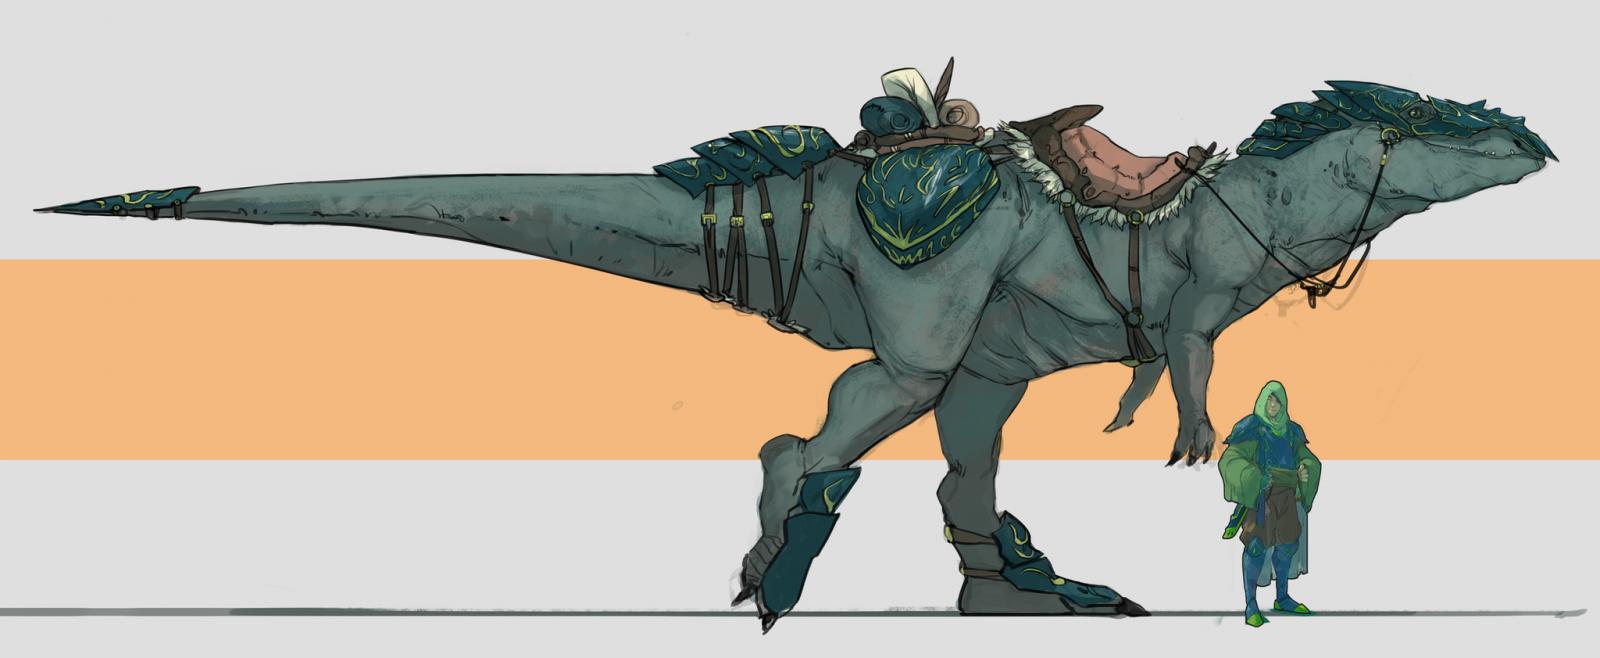 Dino armor. Scout